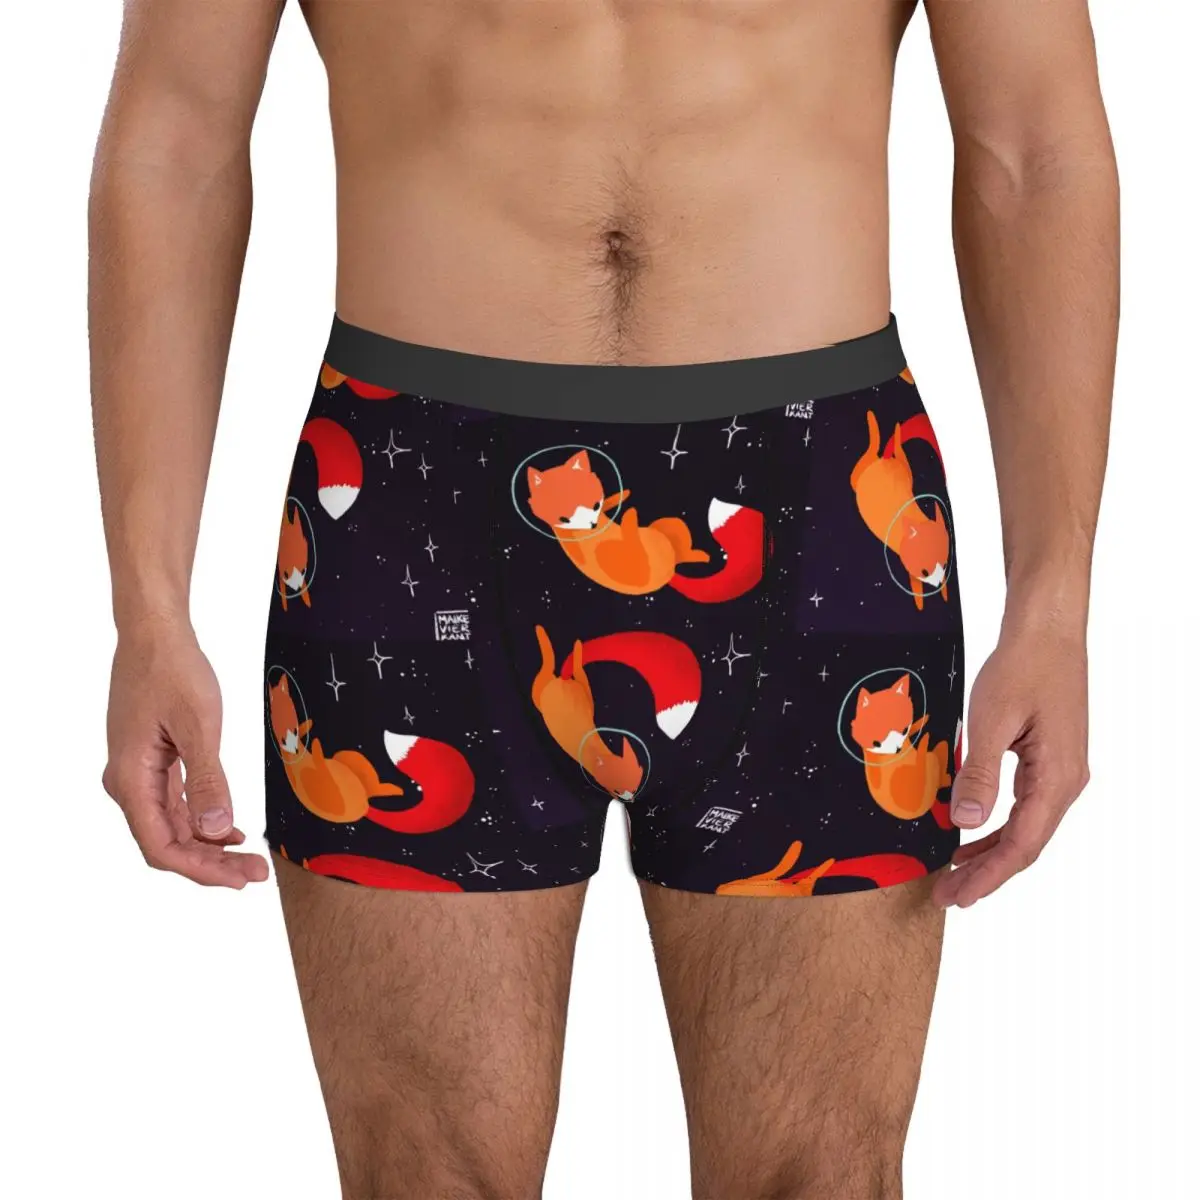 Space Fox Underwear Animal Pouch Trenky Trunk Custom Shorts Briefs Funny Male Panties Plus Size 2XL